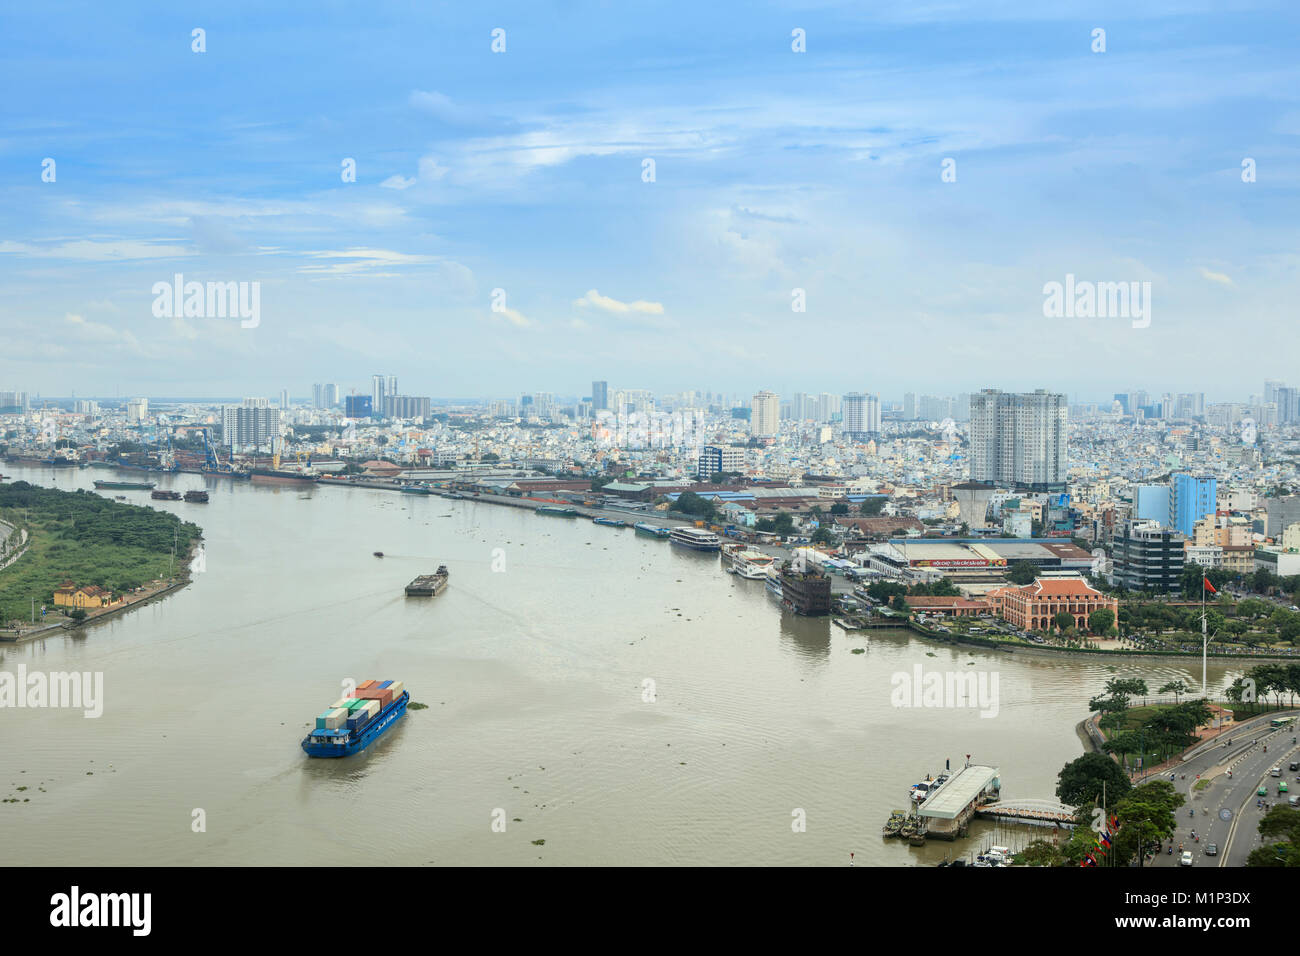 The skyline of Ho Chi Minh City (Saigon) showing the Bitexco tower and the Saigon River, Ho Chi Minh City, Vietnam, Indochina, Southeast Asia, Asia Stock Photo